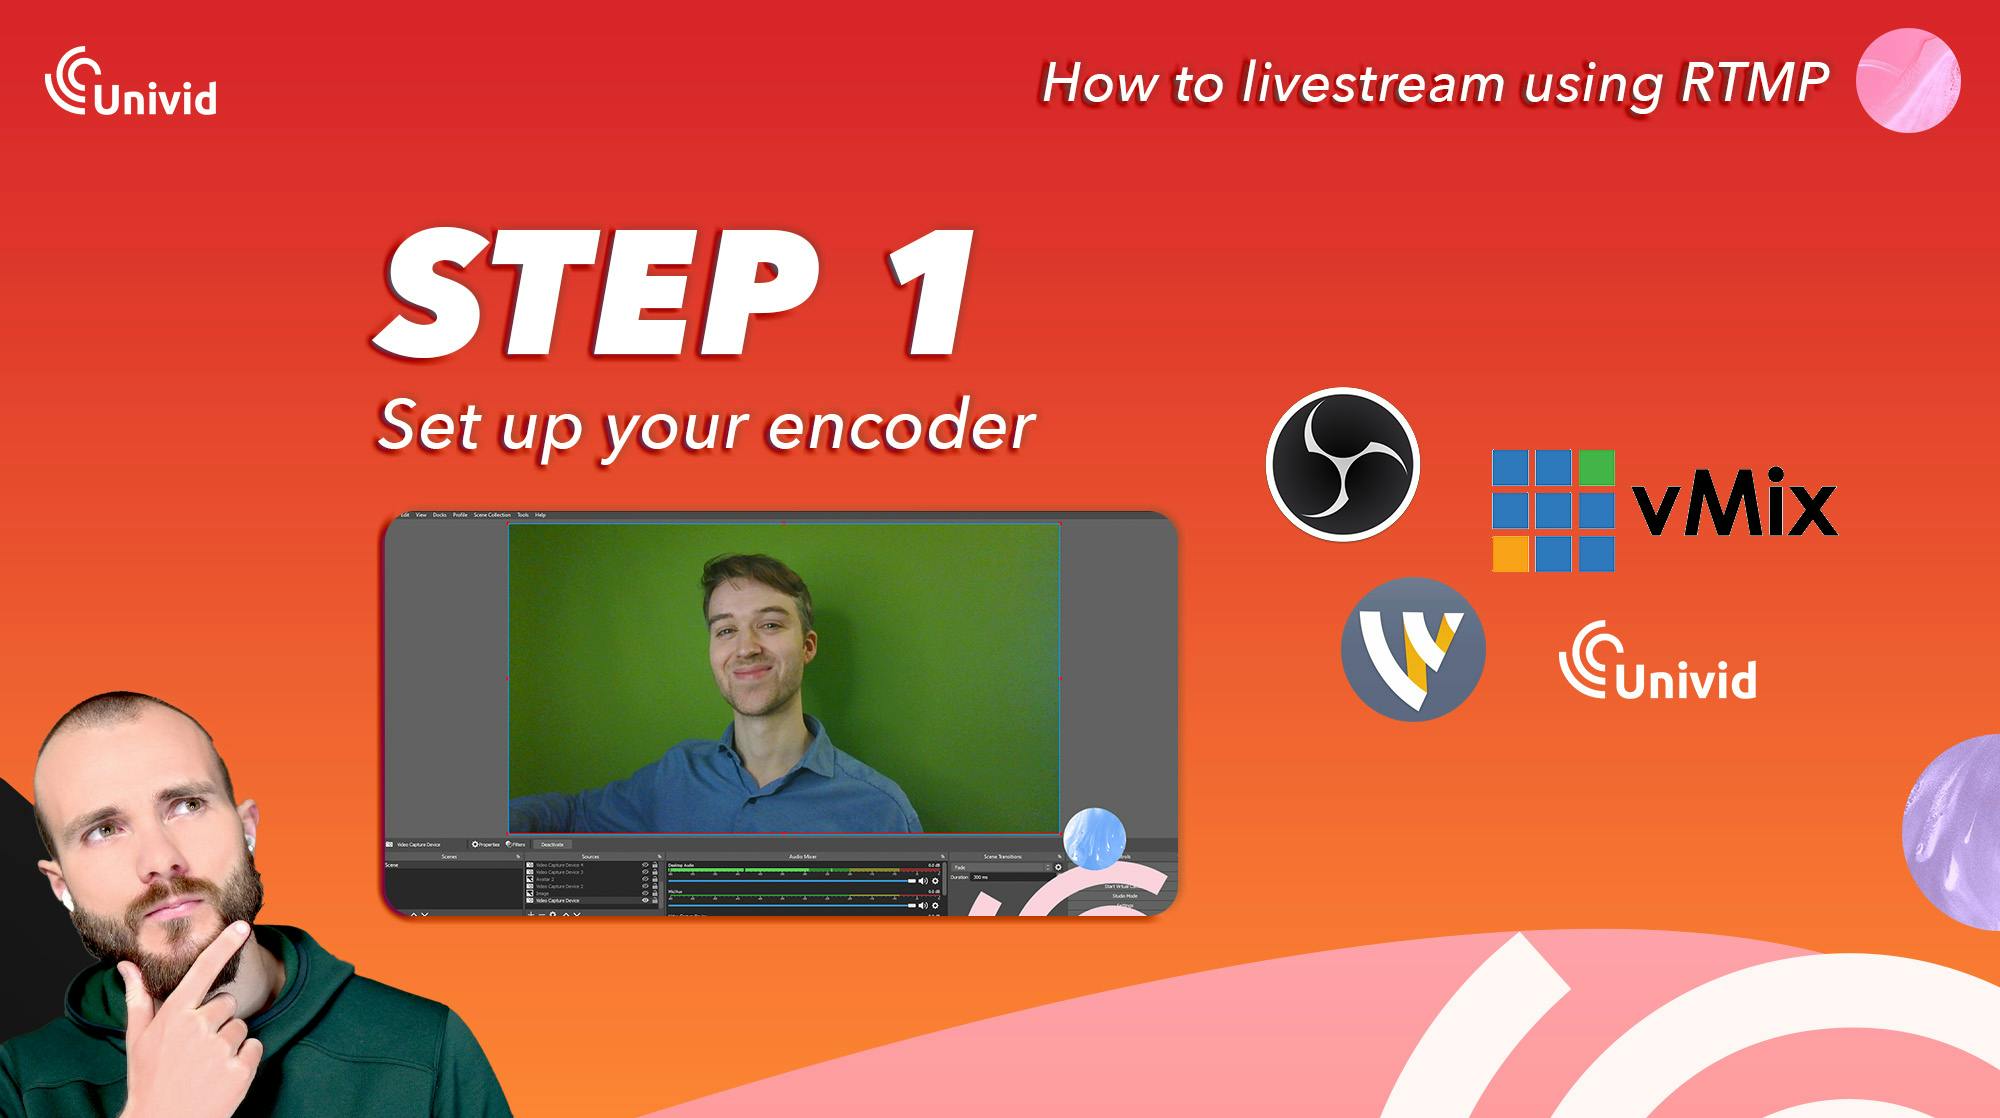 RTMP How to livestream guide - Step 3 - Set up encoder